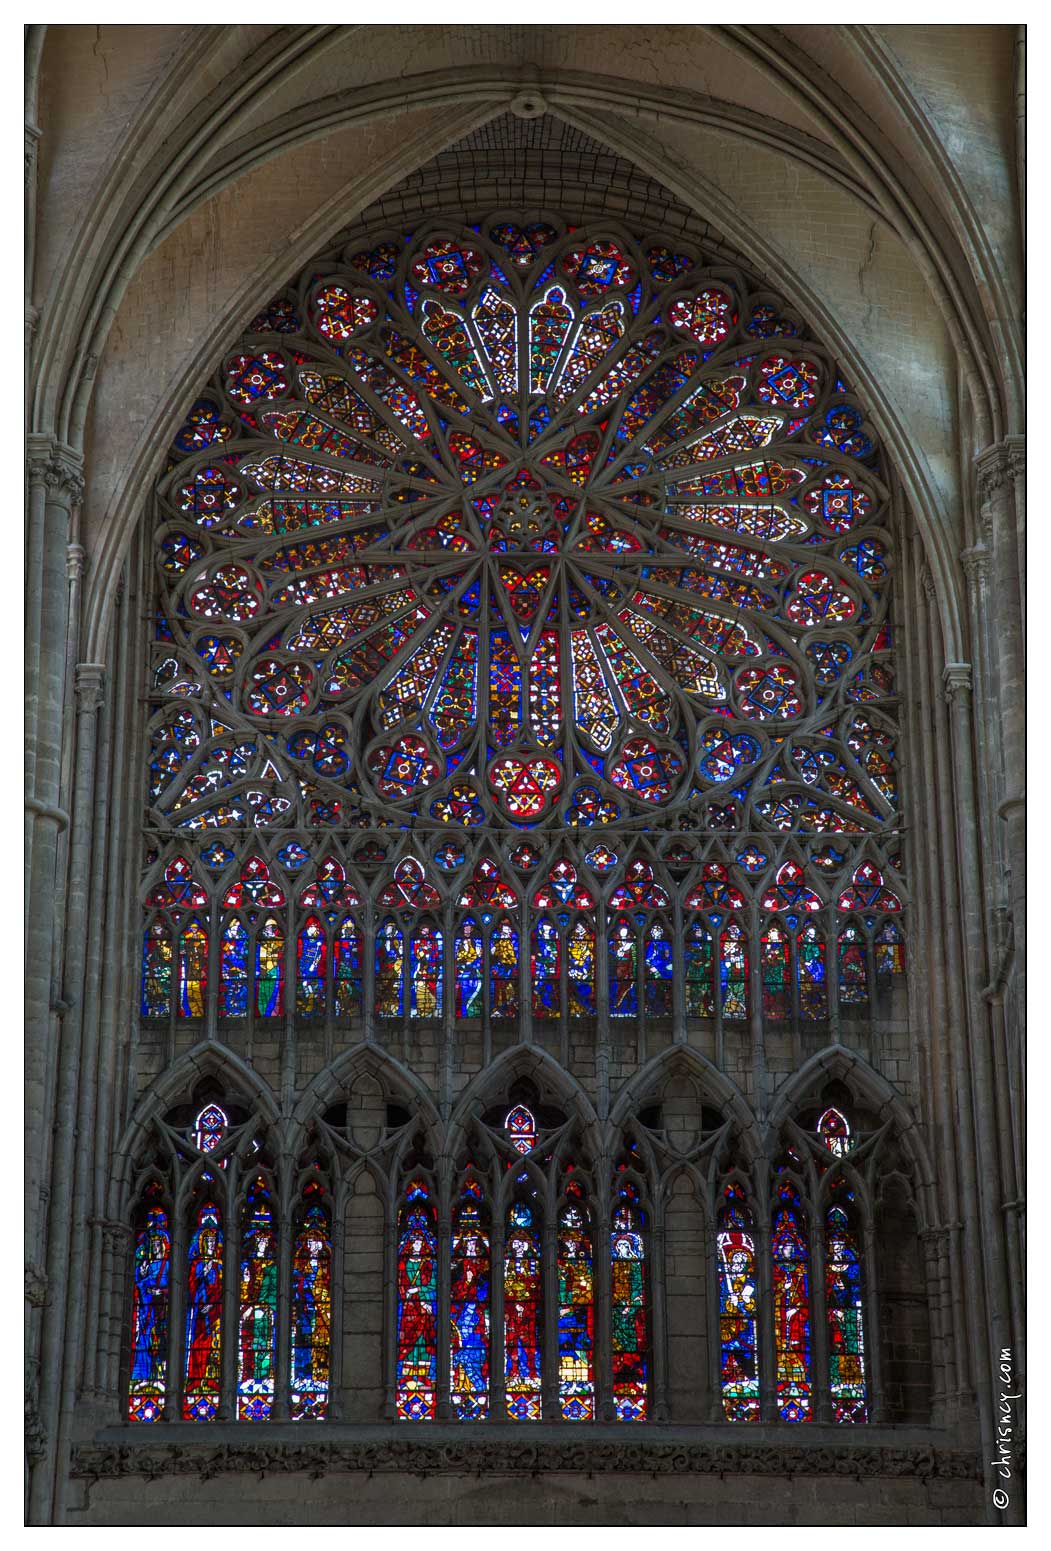 20150407-59_0418-Amiens_Cathedrale.jpg